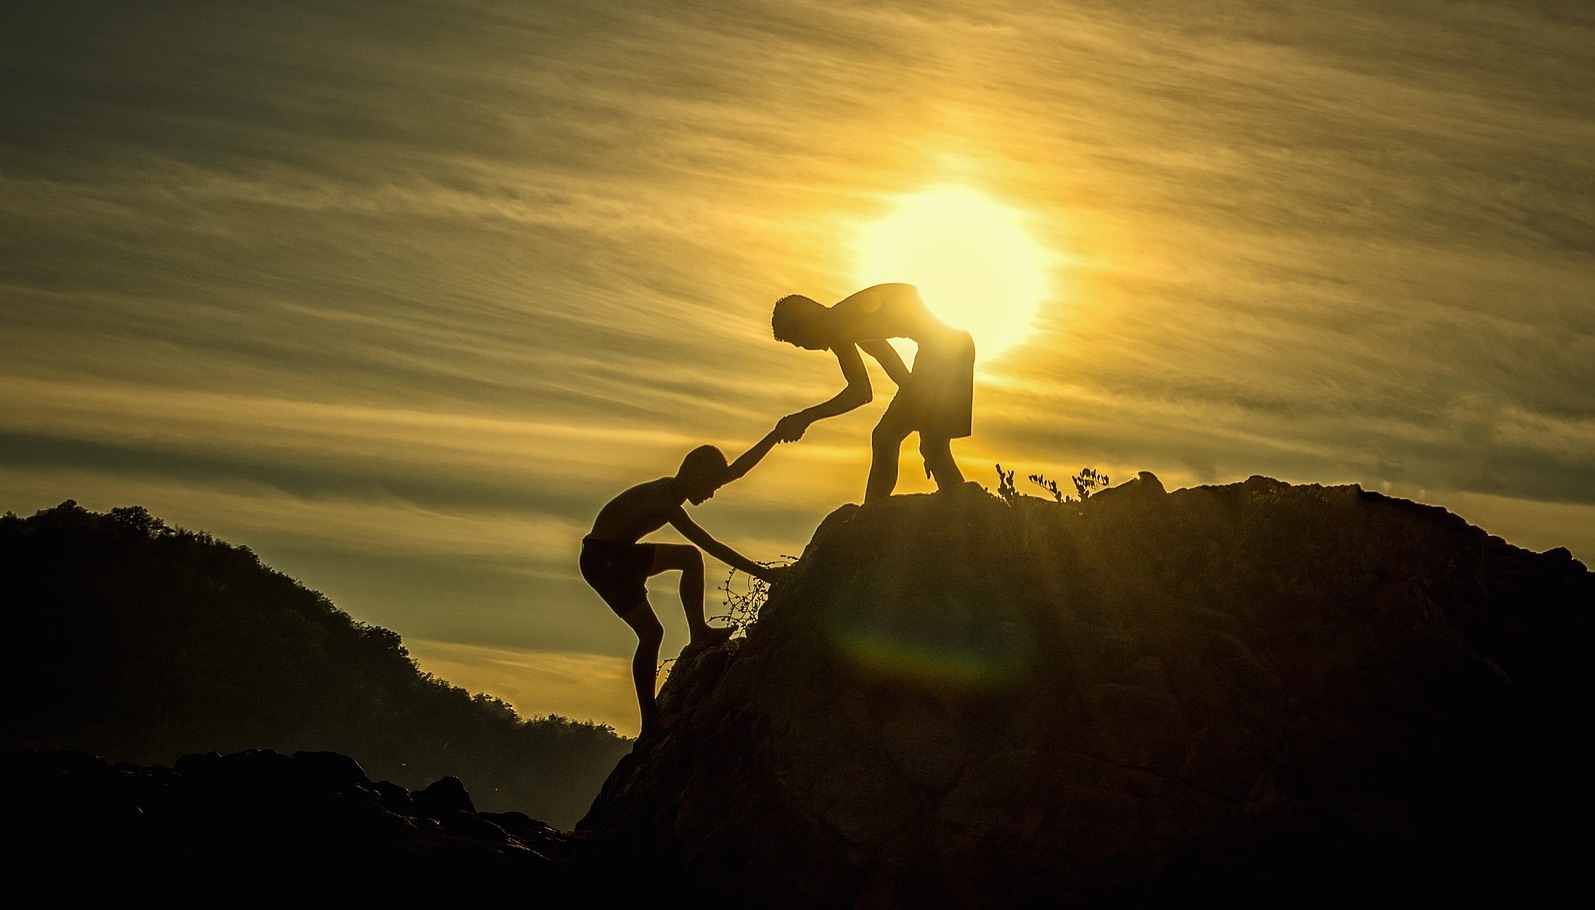 Top 30 inspirational teamwork quotes - Highly motivational - Faith